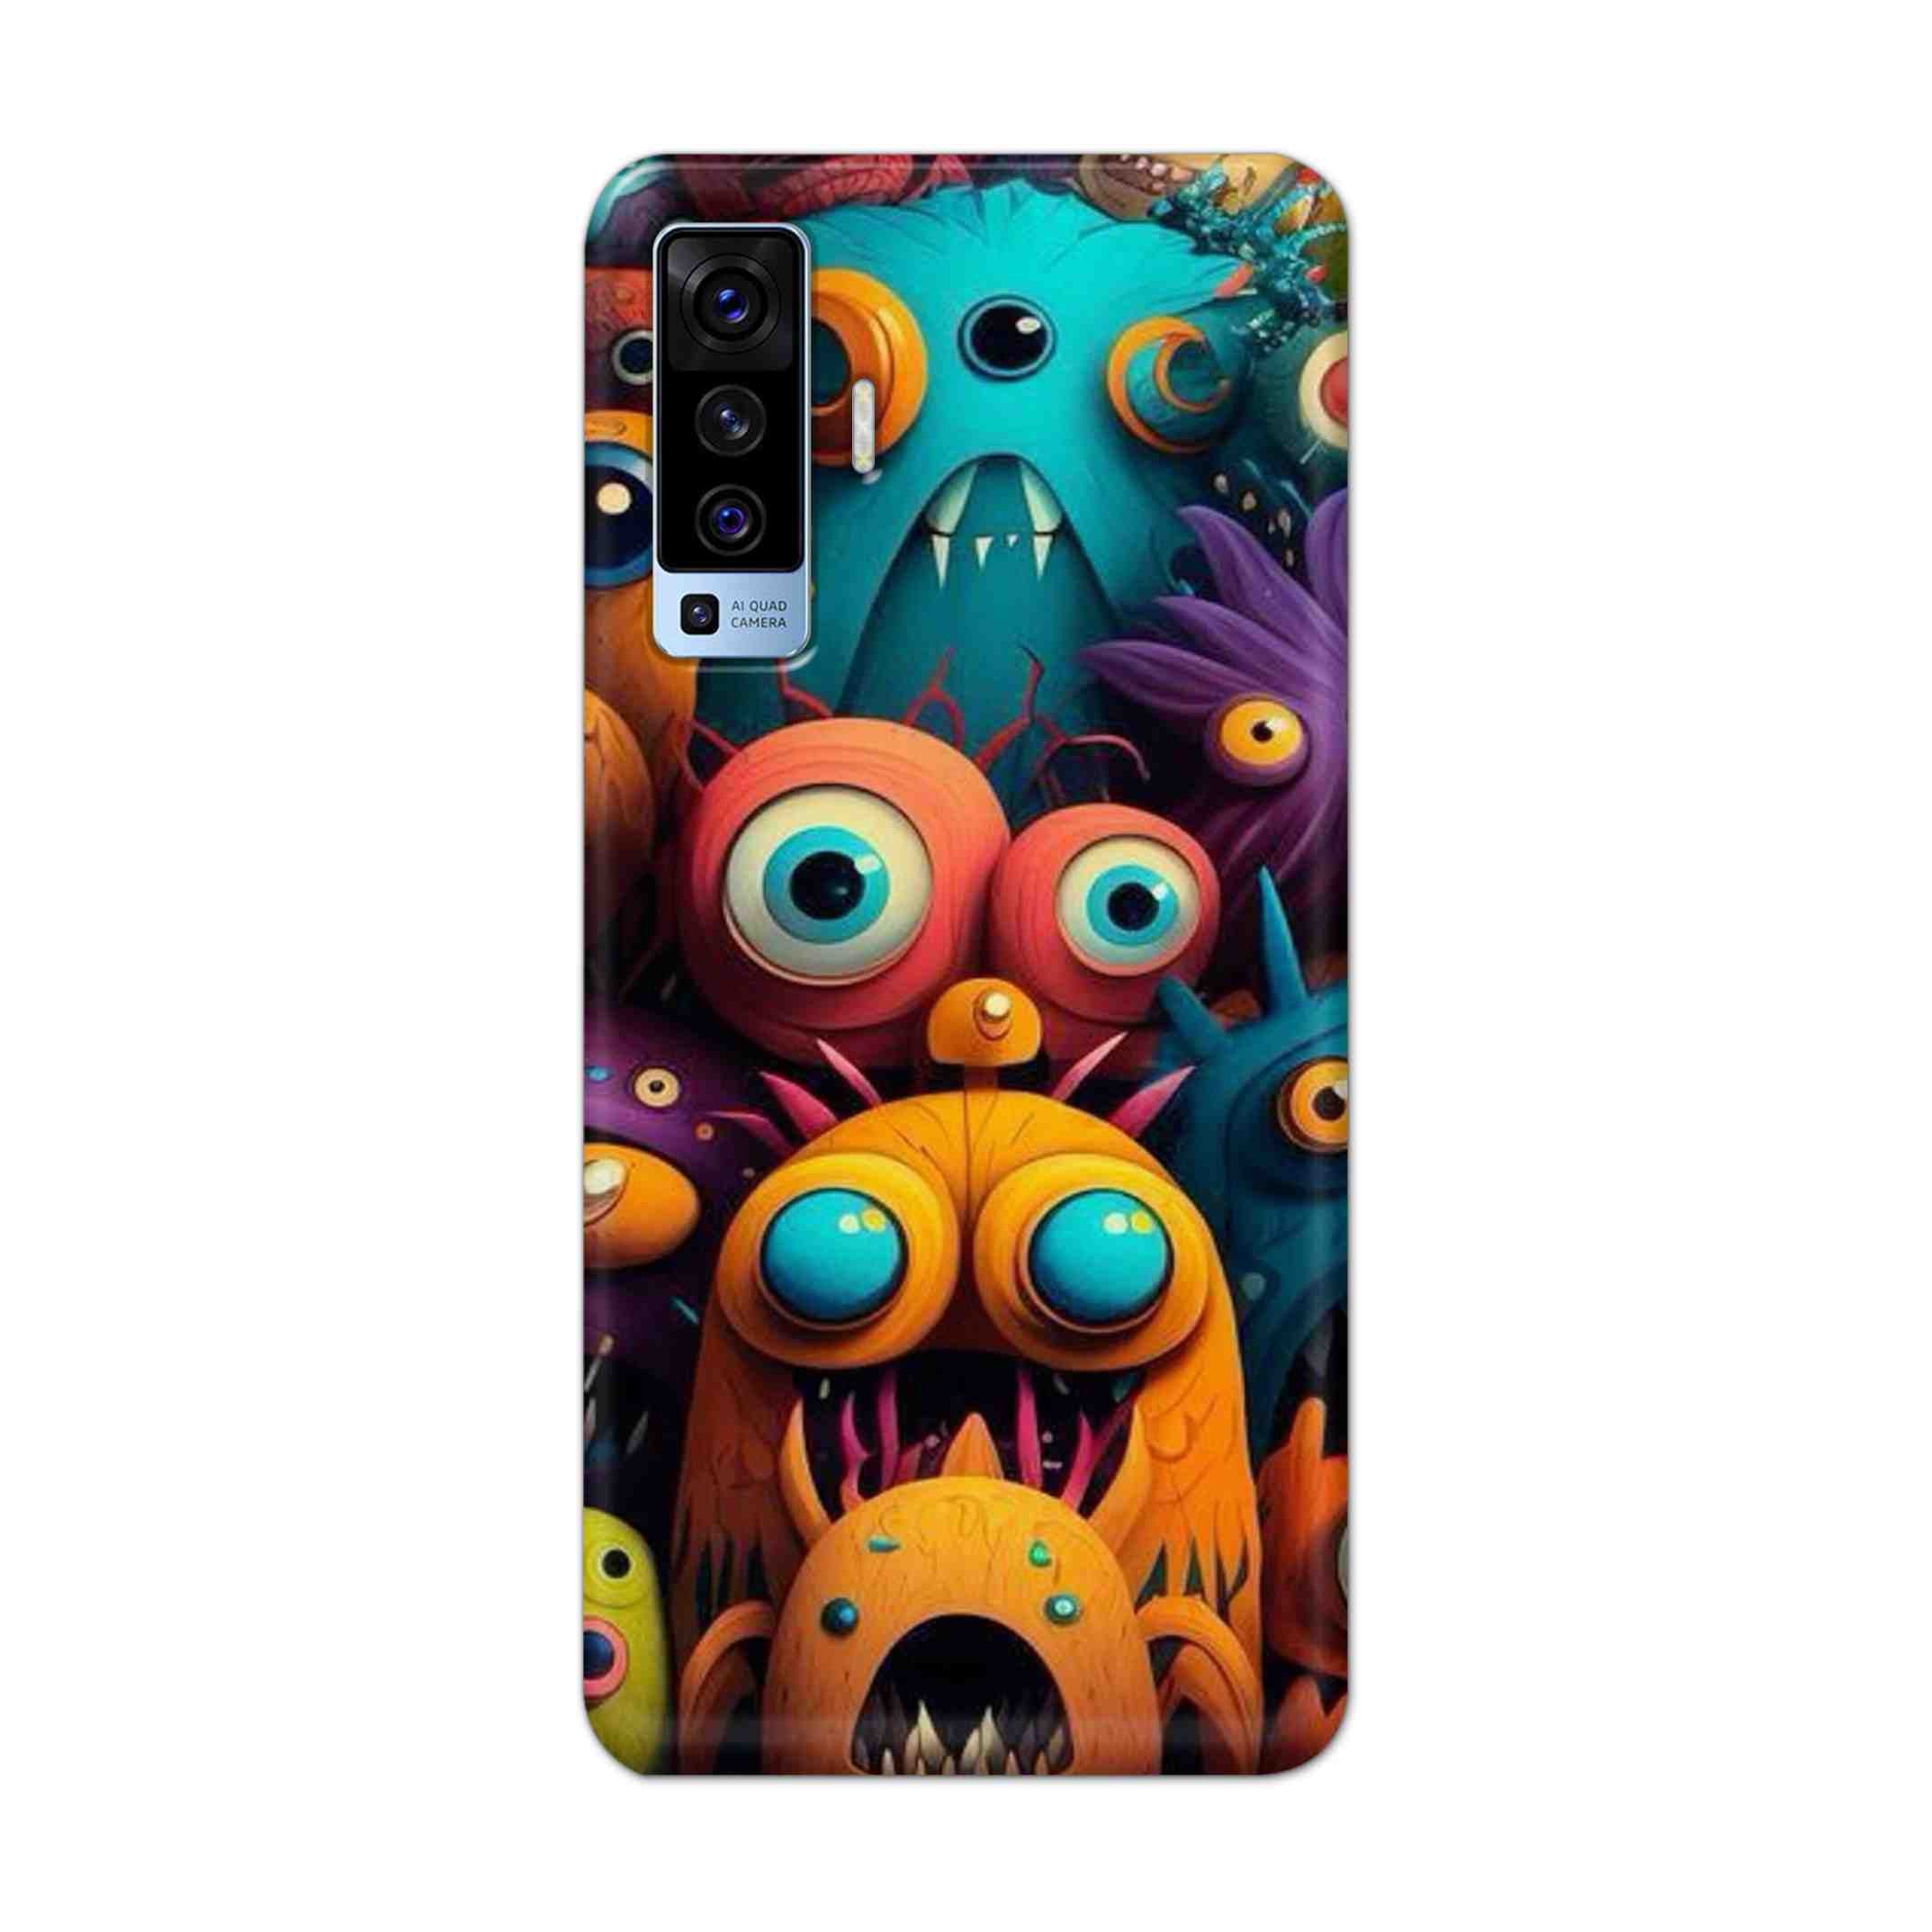 Buy Zombie Hard Back Mobile Phone Case Cover For Vivo X50 Online